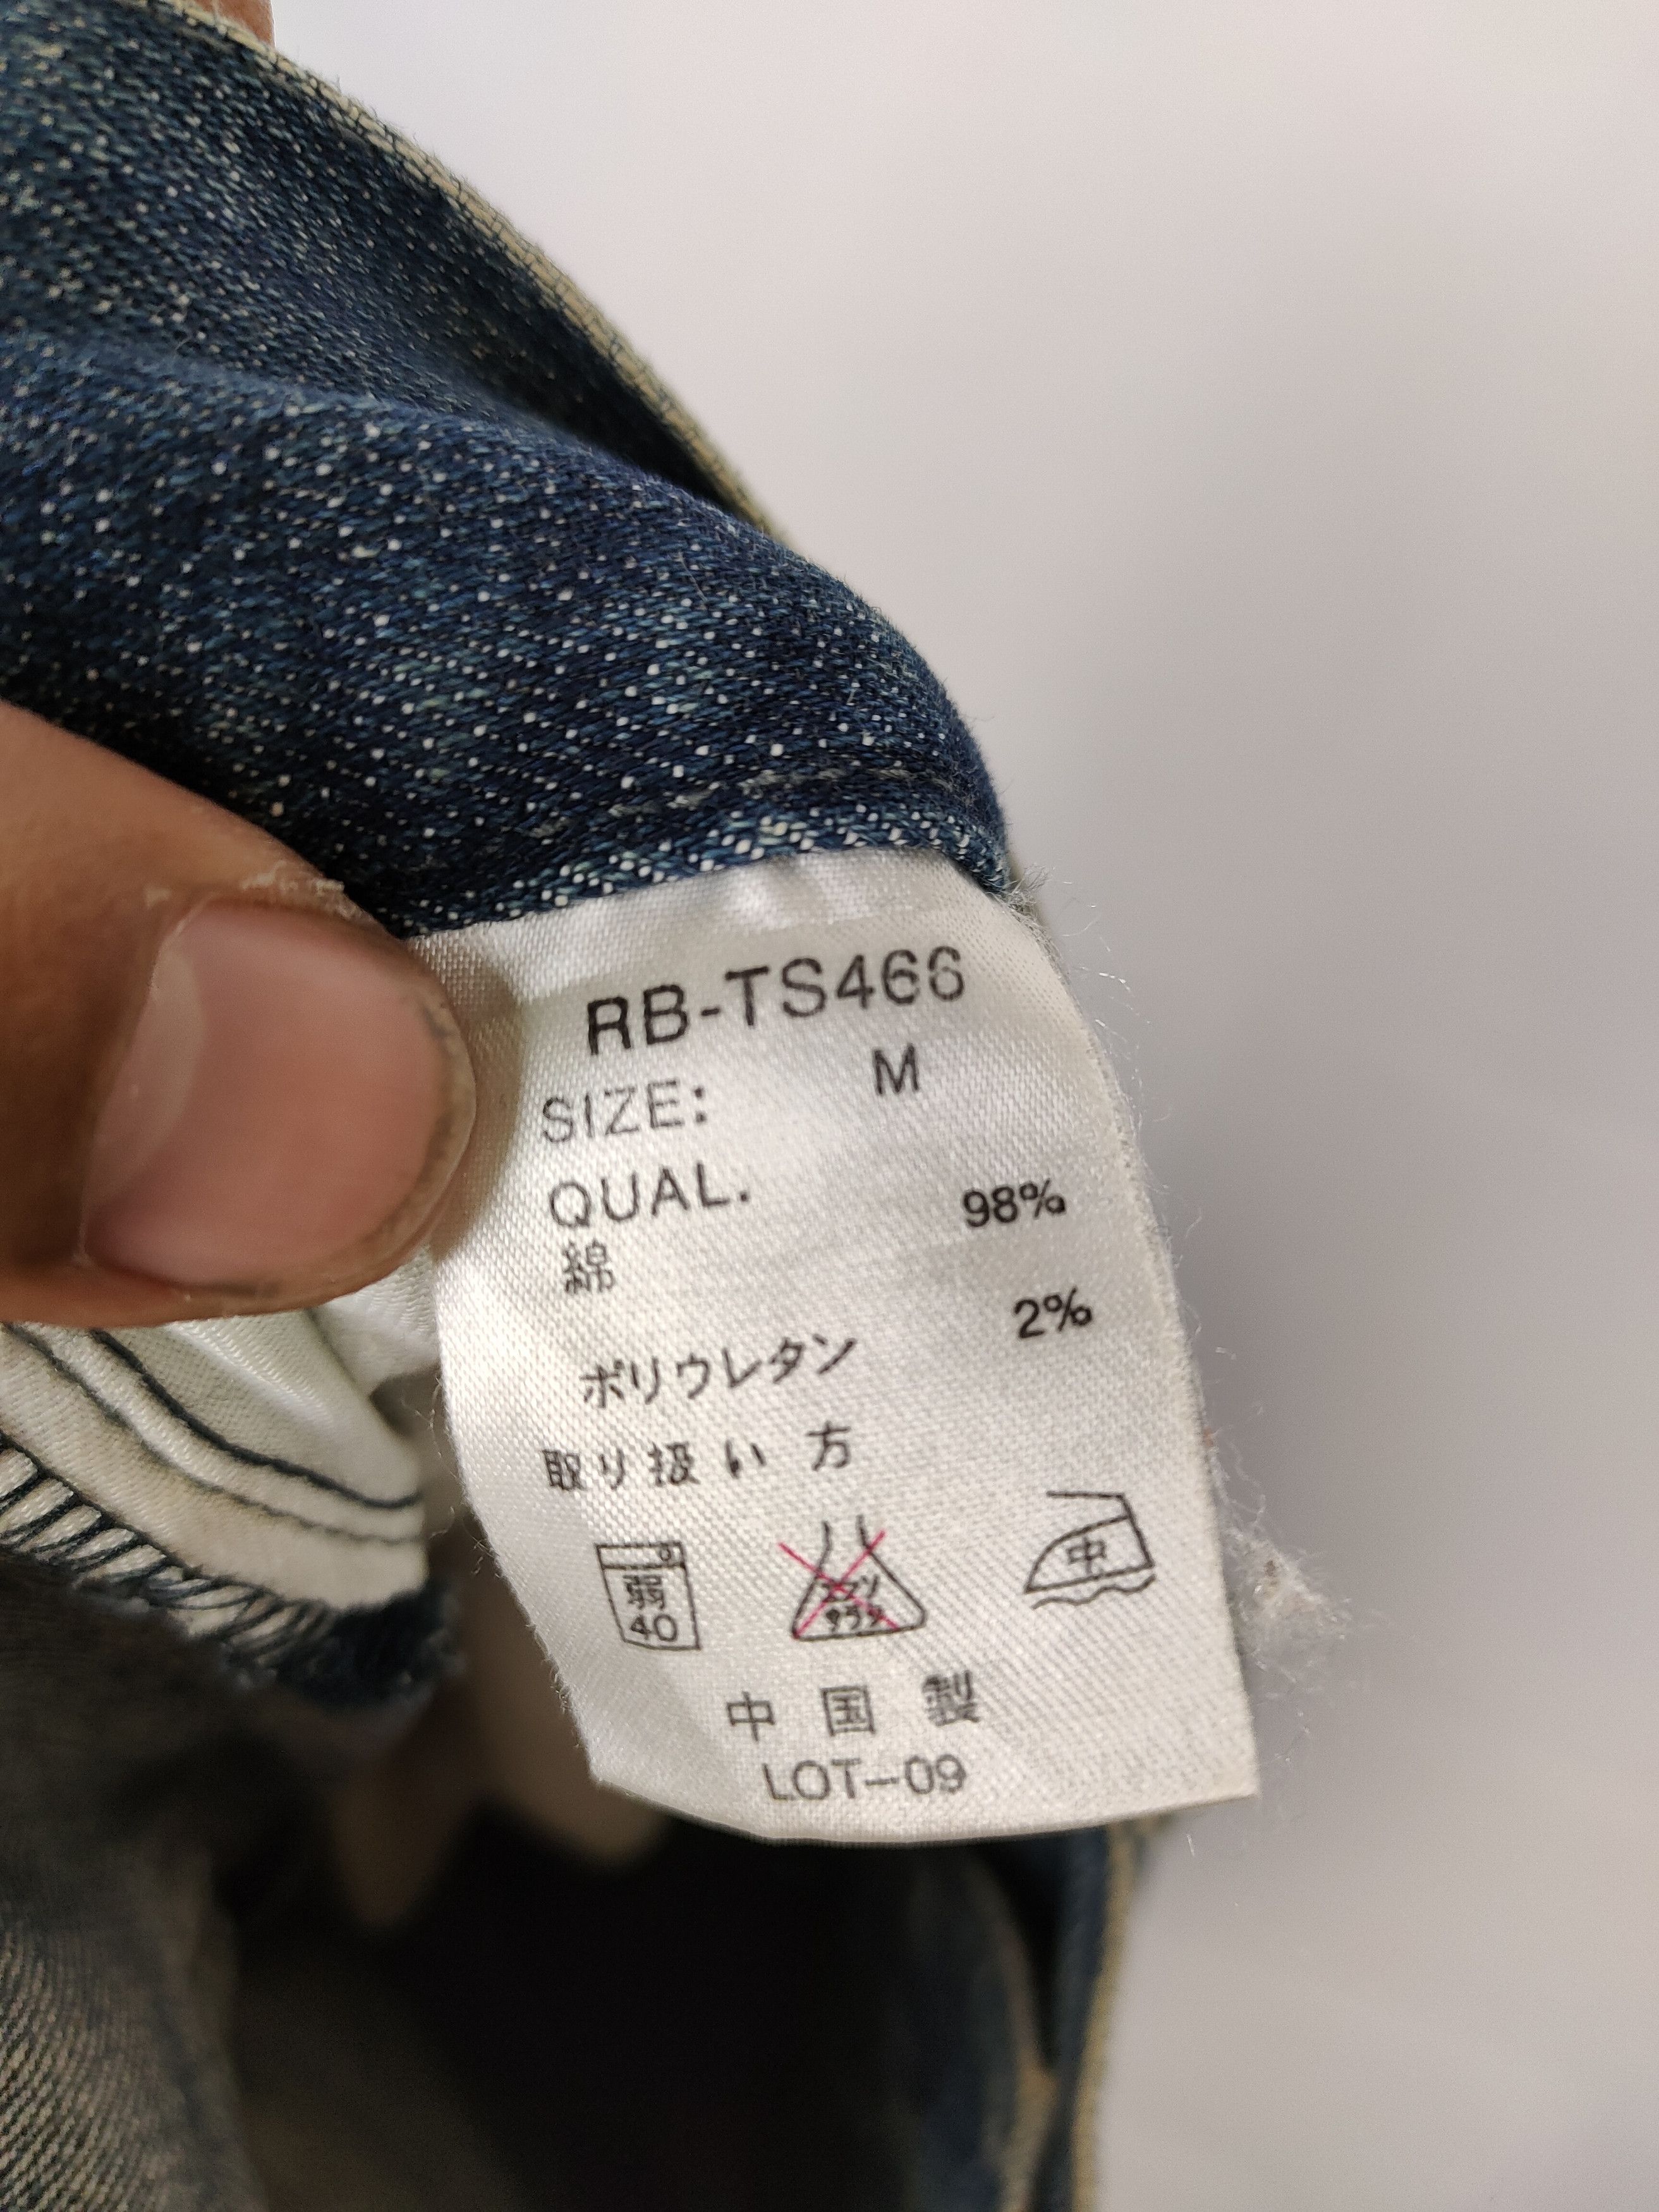 Vintage Vintage Rageblue Japanese Brand Stylish Denim Pant Size US 33 - 5 Preview